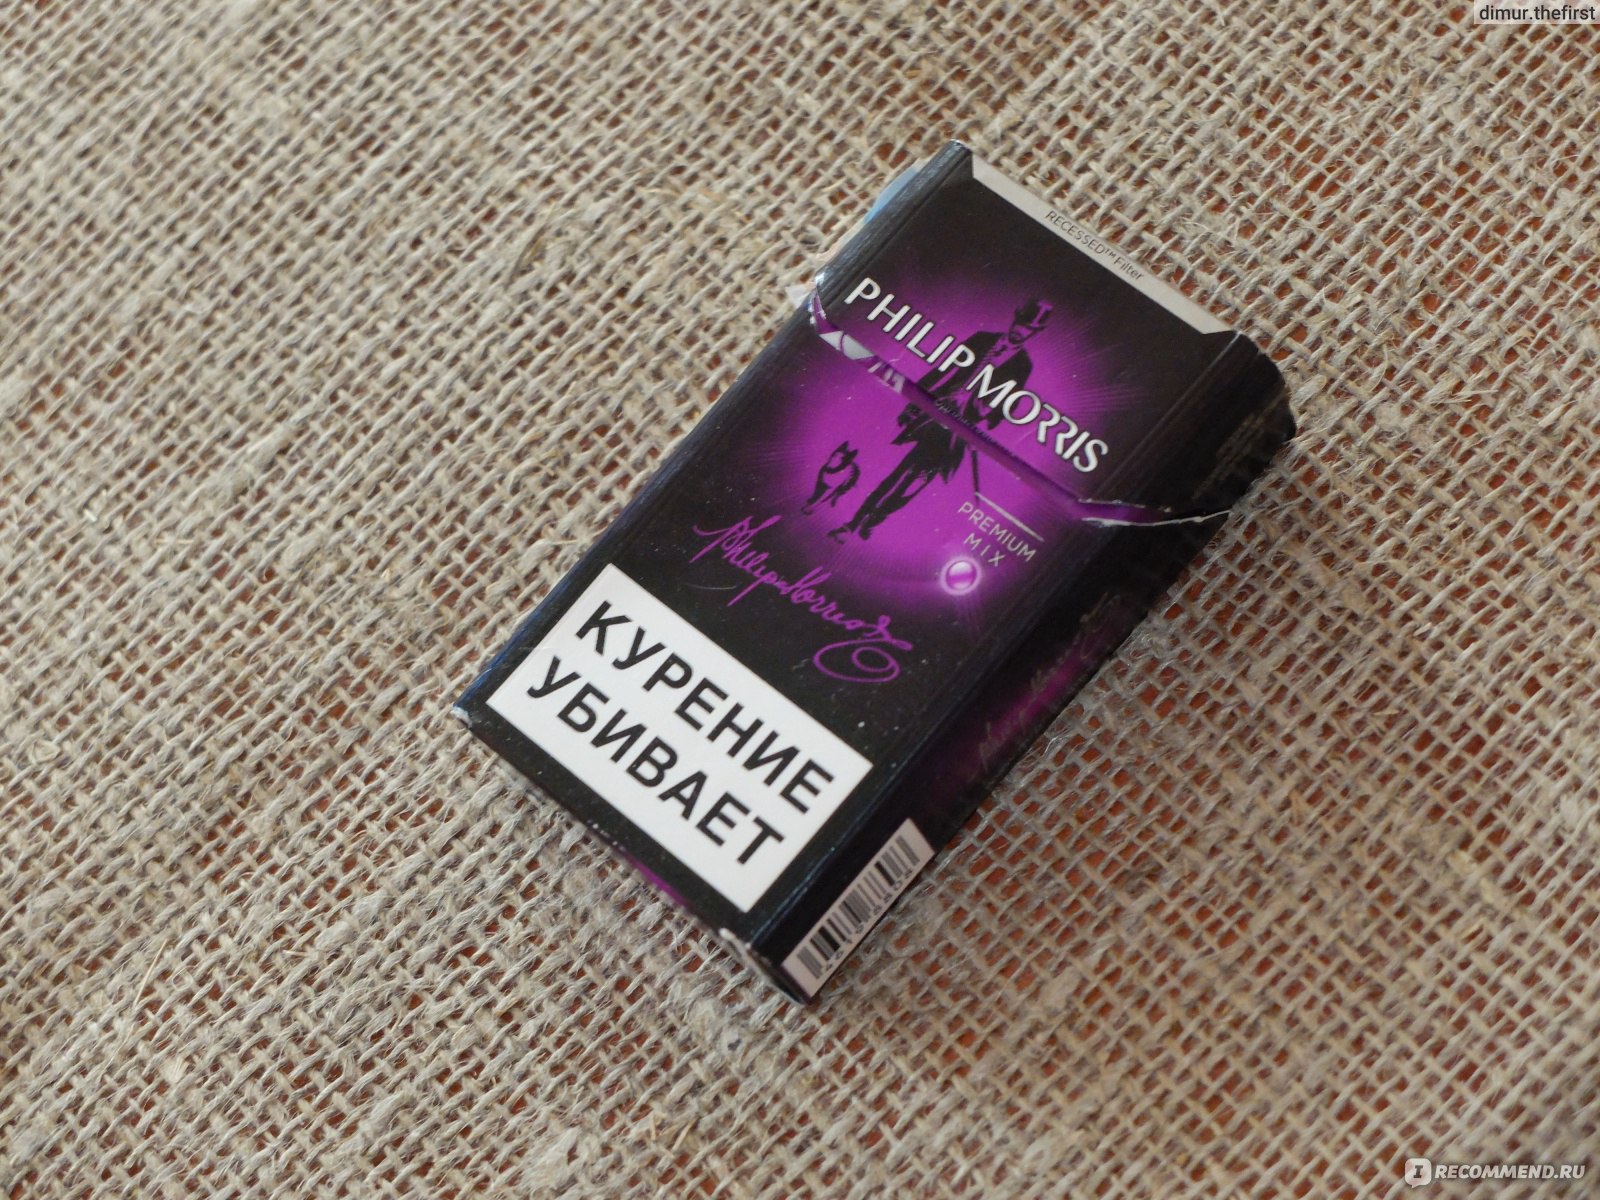 Филип моррис фиолетовый. Сигареты Филип Моррис с кнопкой фиолетовой. Сигареты Philip Morris с фиолетовой кнопкой.